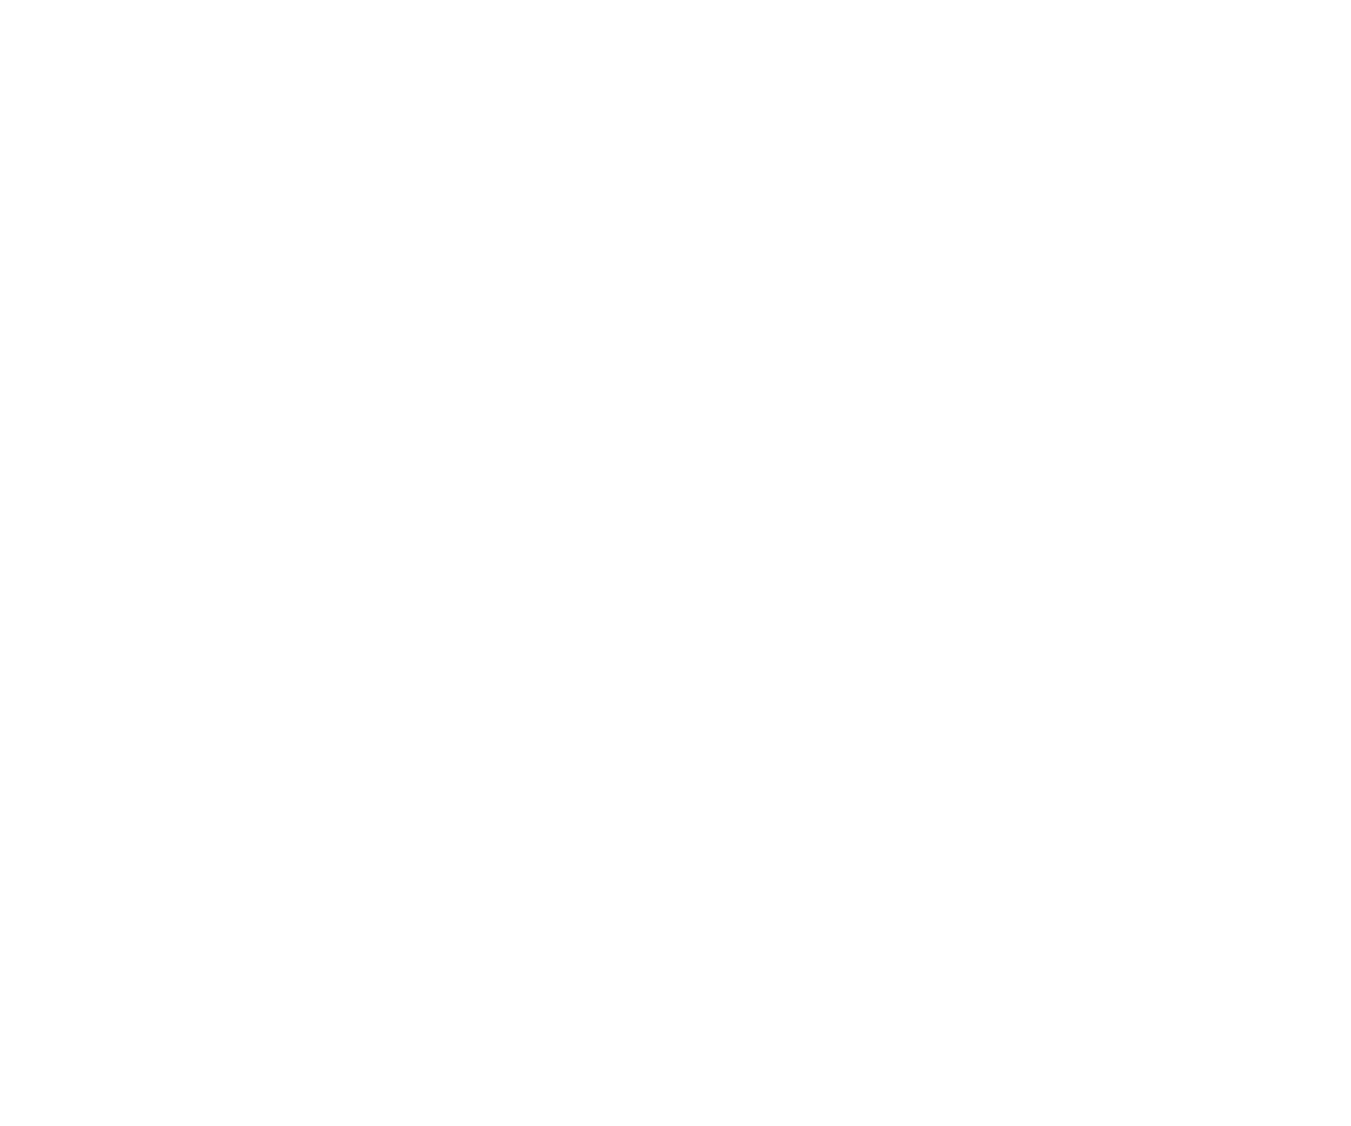 AVENUE OF THE GIANTS